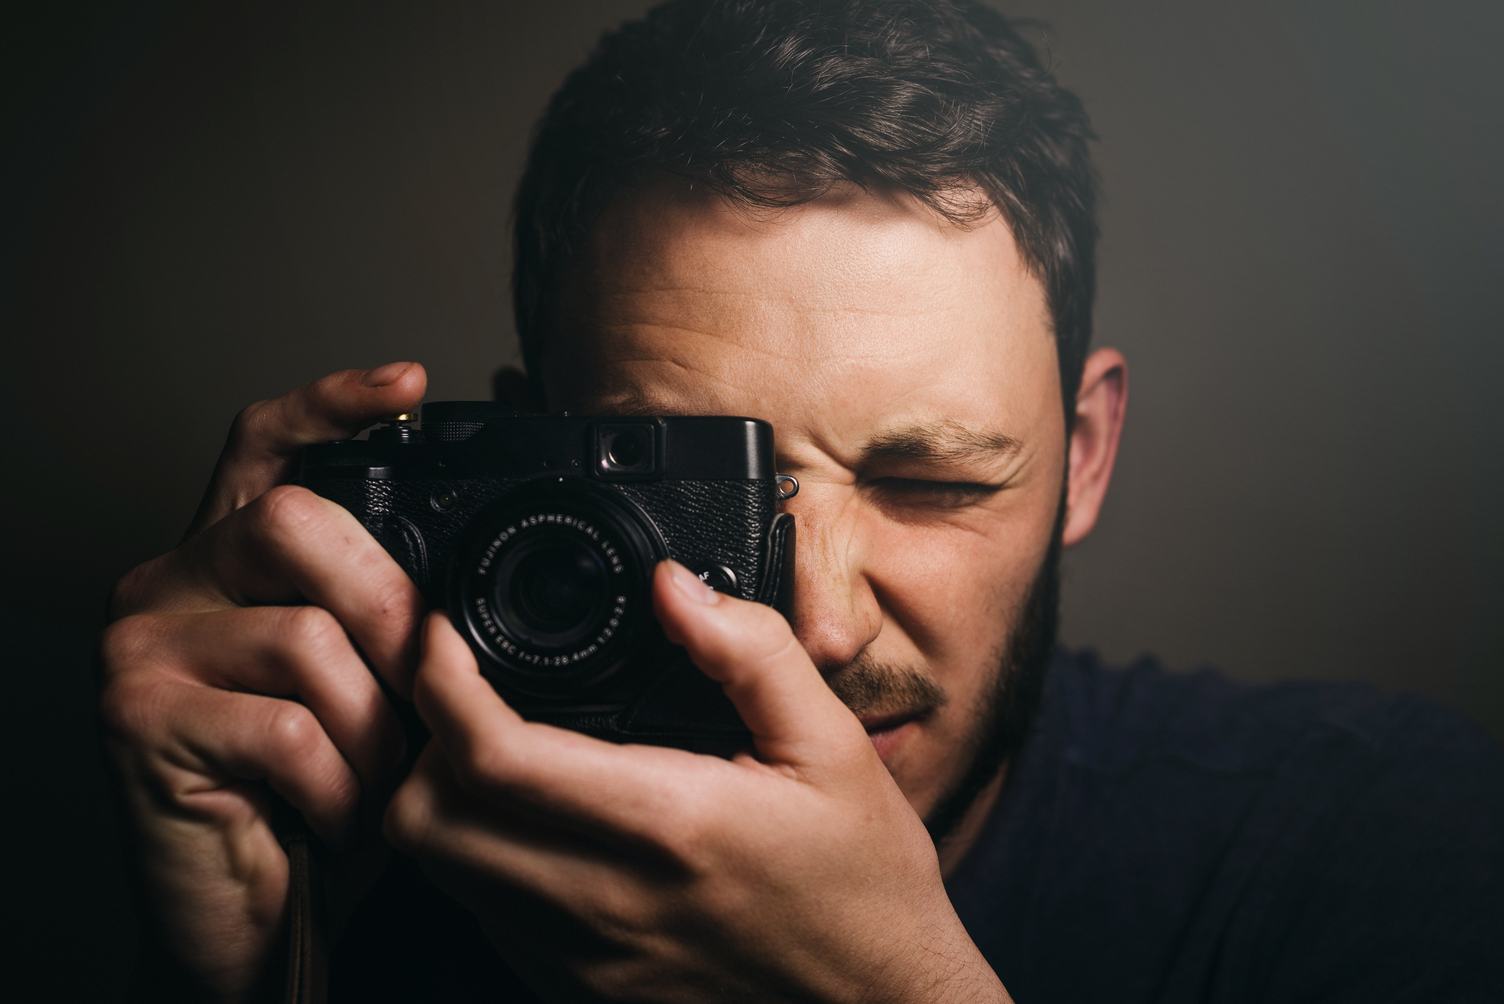 Self- Portrait Photographer with Camera